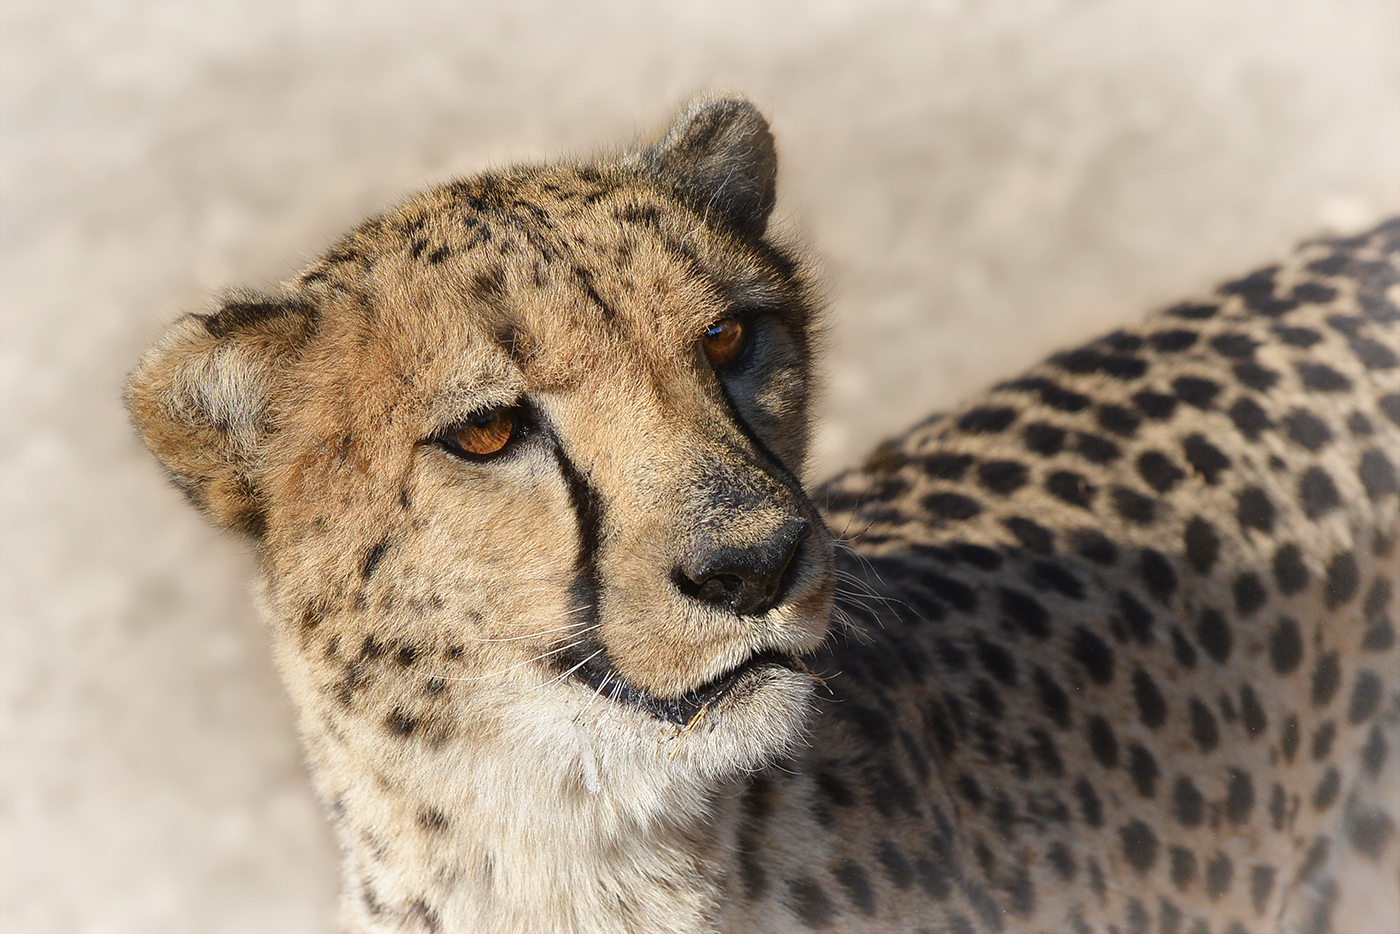 Cheetah hautnah